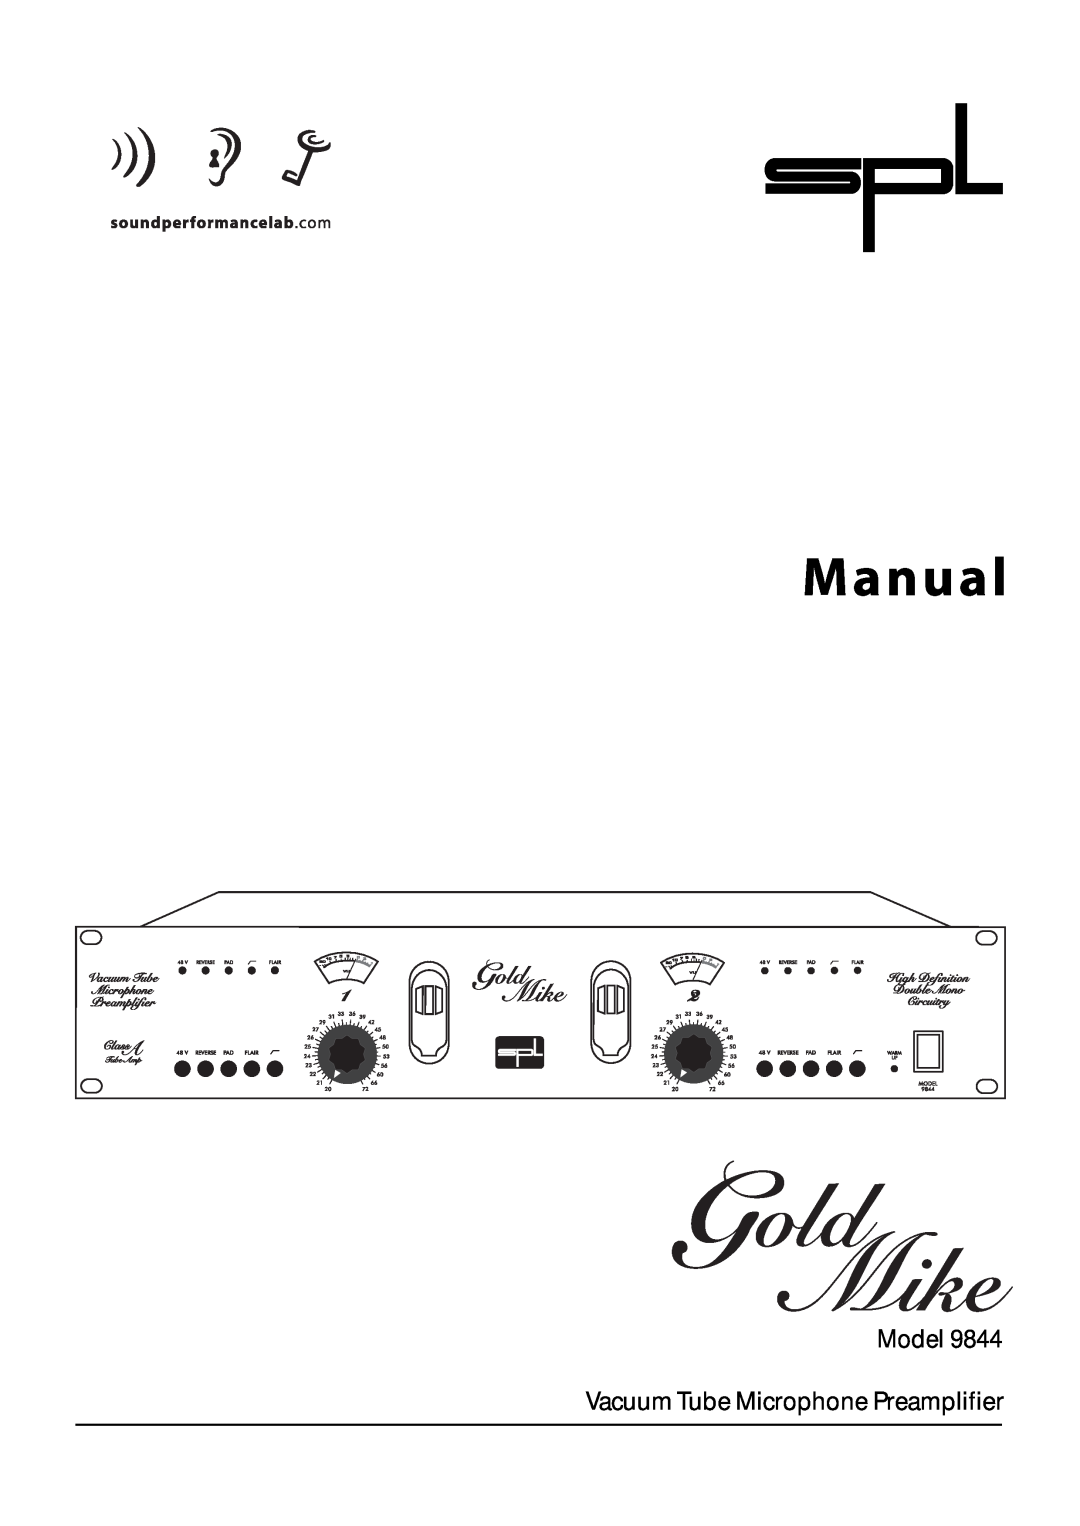 Sound Performance Lab 9844 manual M a n u a l, Model Vacuum Tube Microphone Preamplifier 